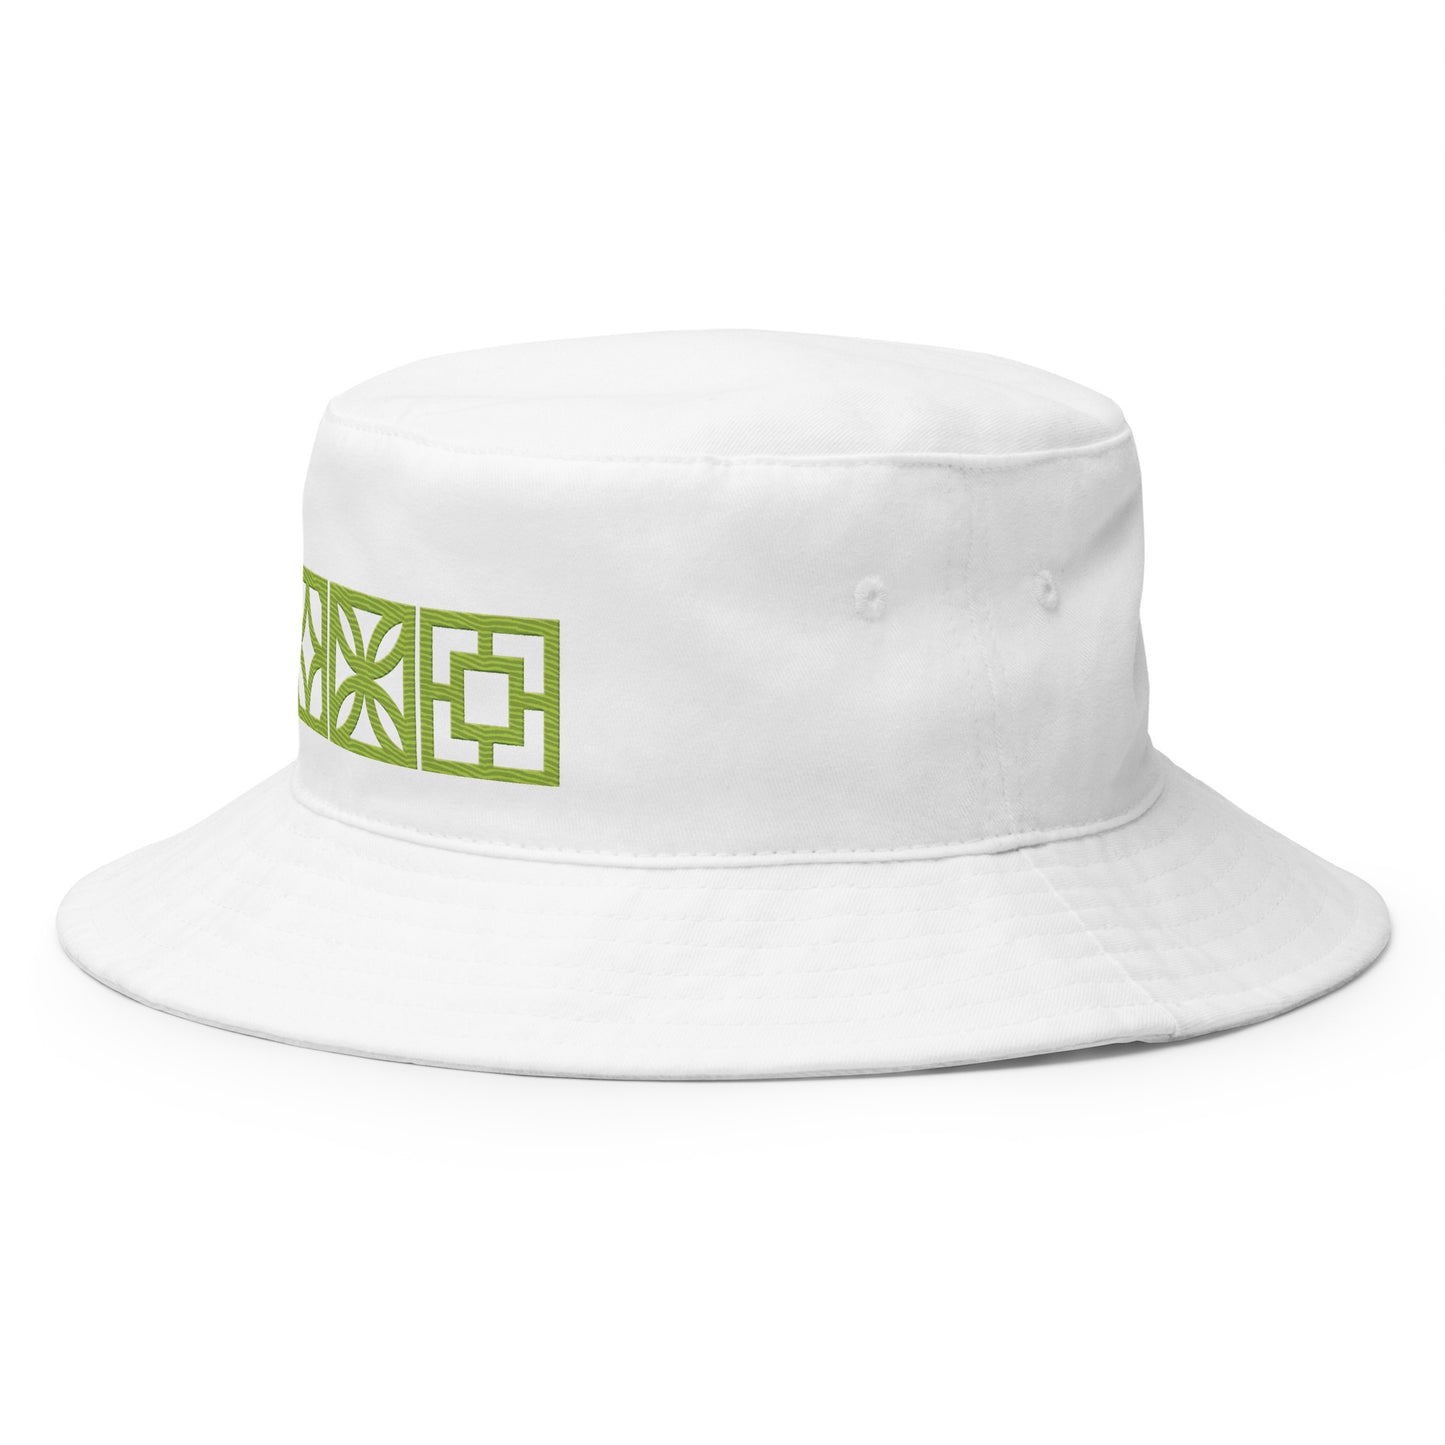 The "Tribe" Breeze Block Bucket Hat